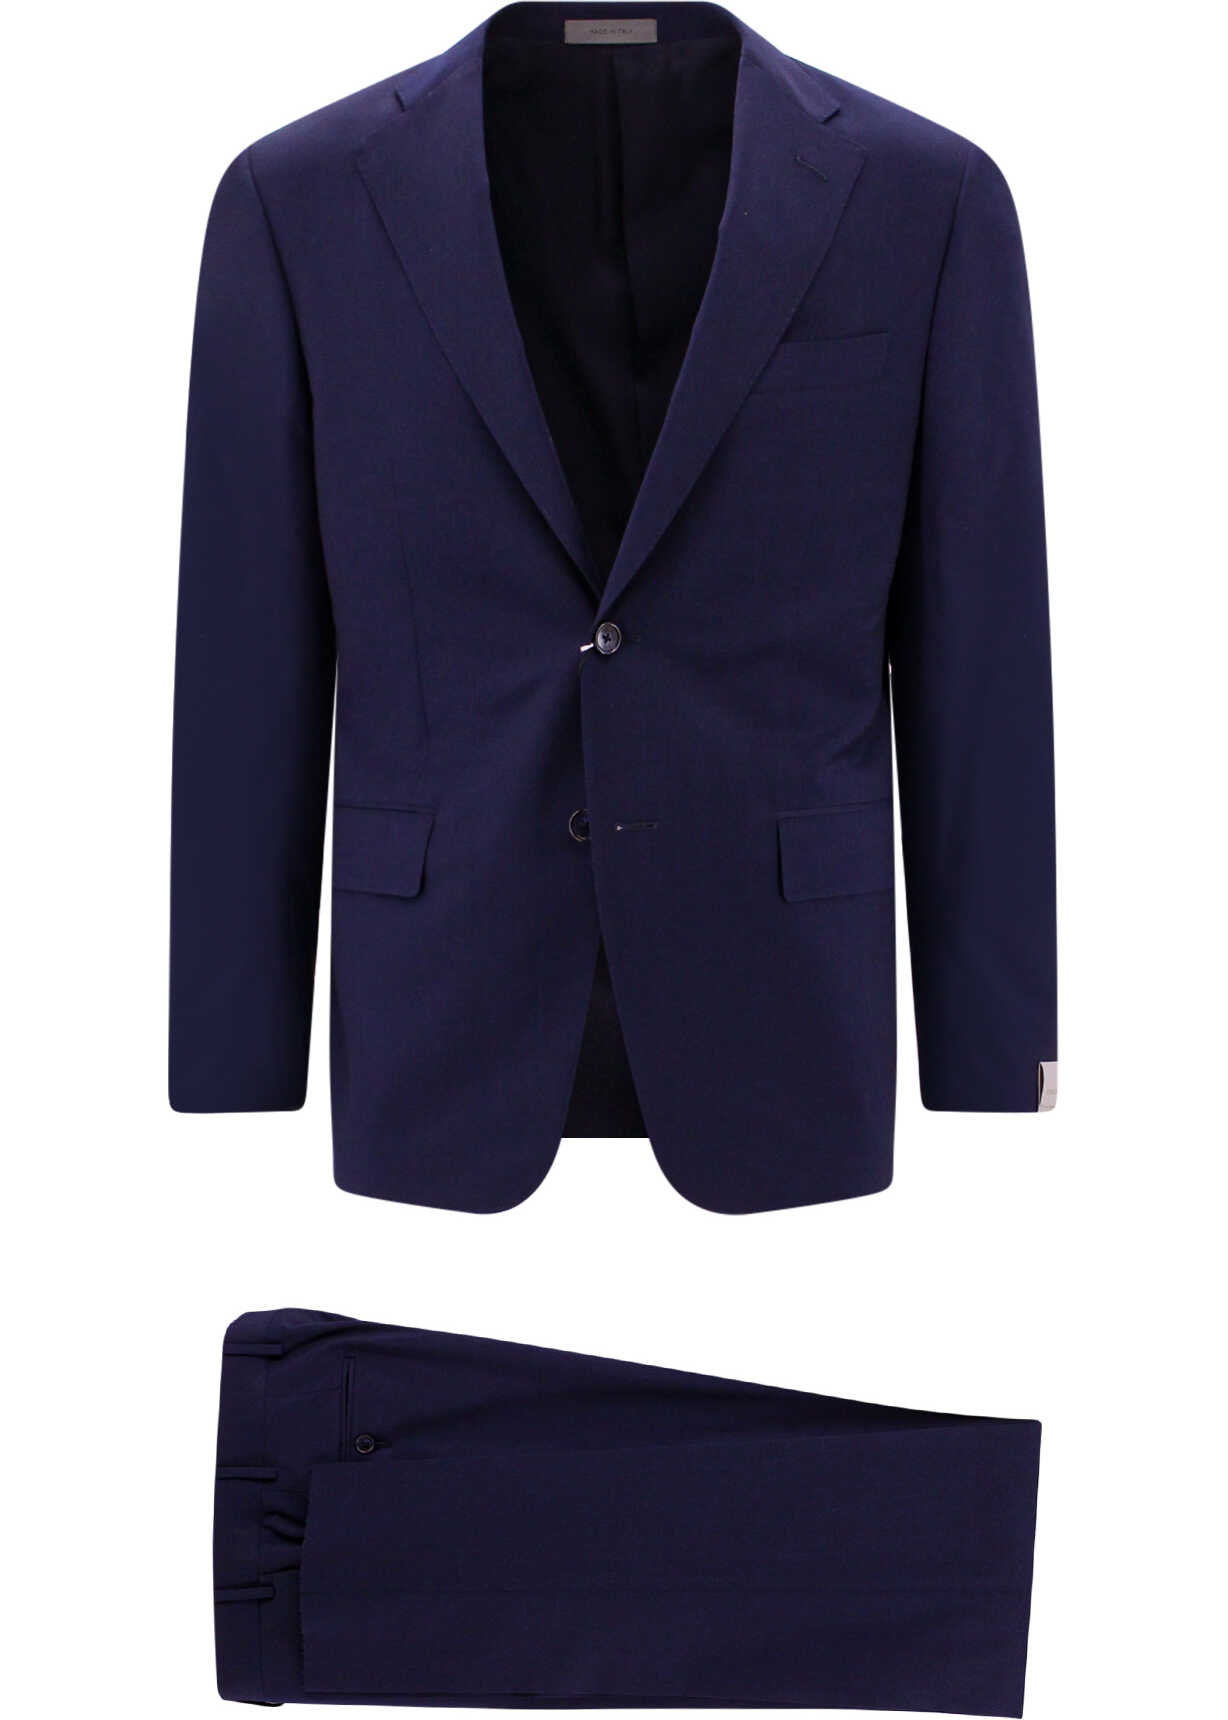 CORNELIANI Suit Blue b-mall.ro